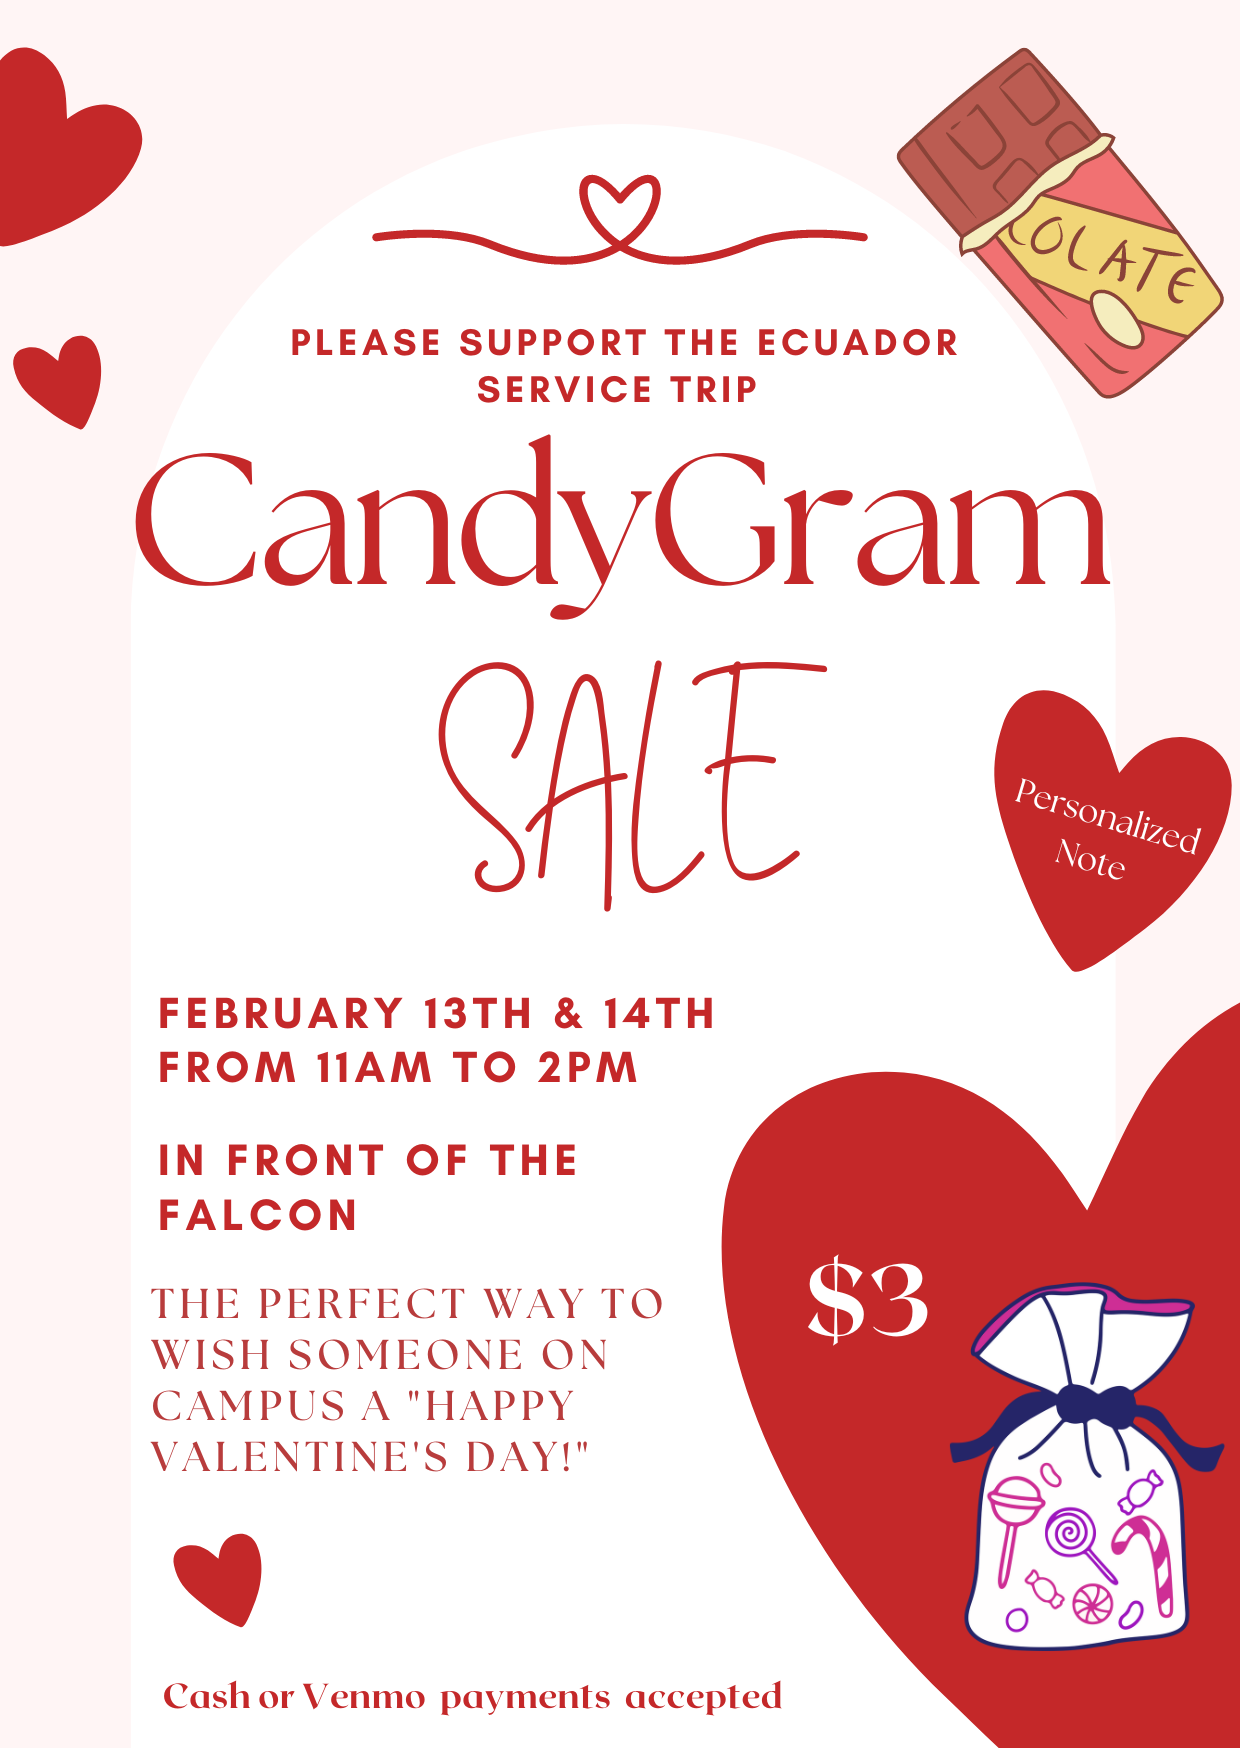 Candygram sale poster